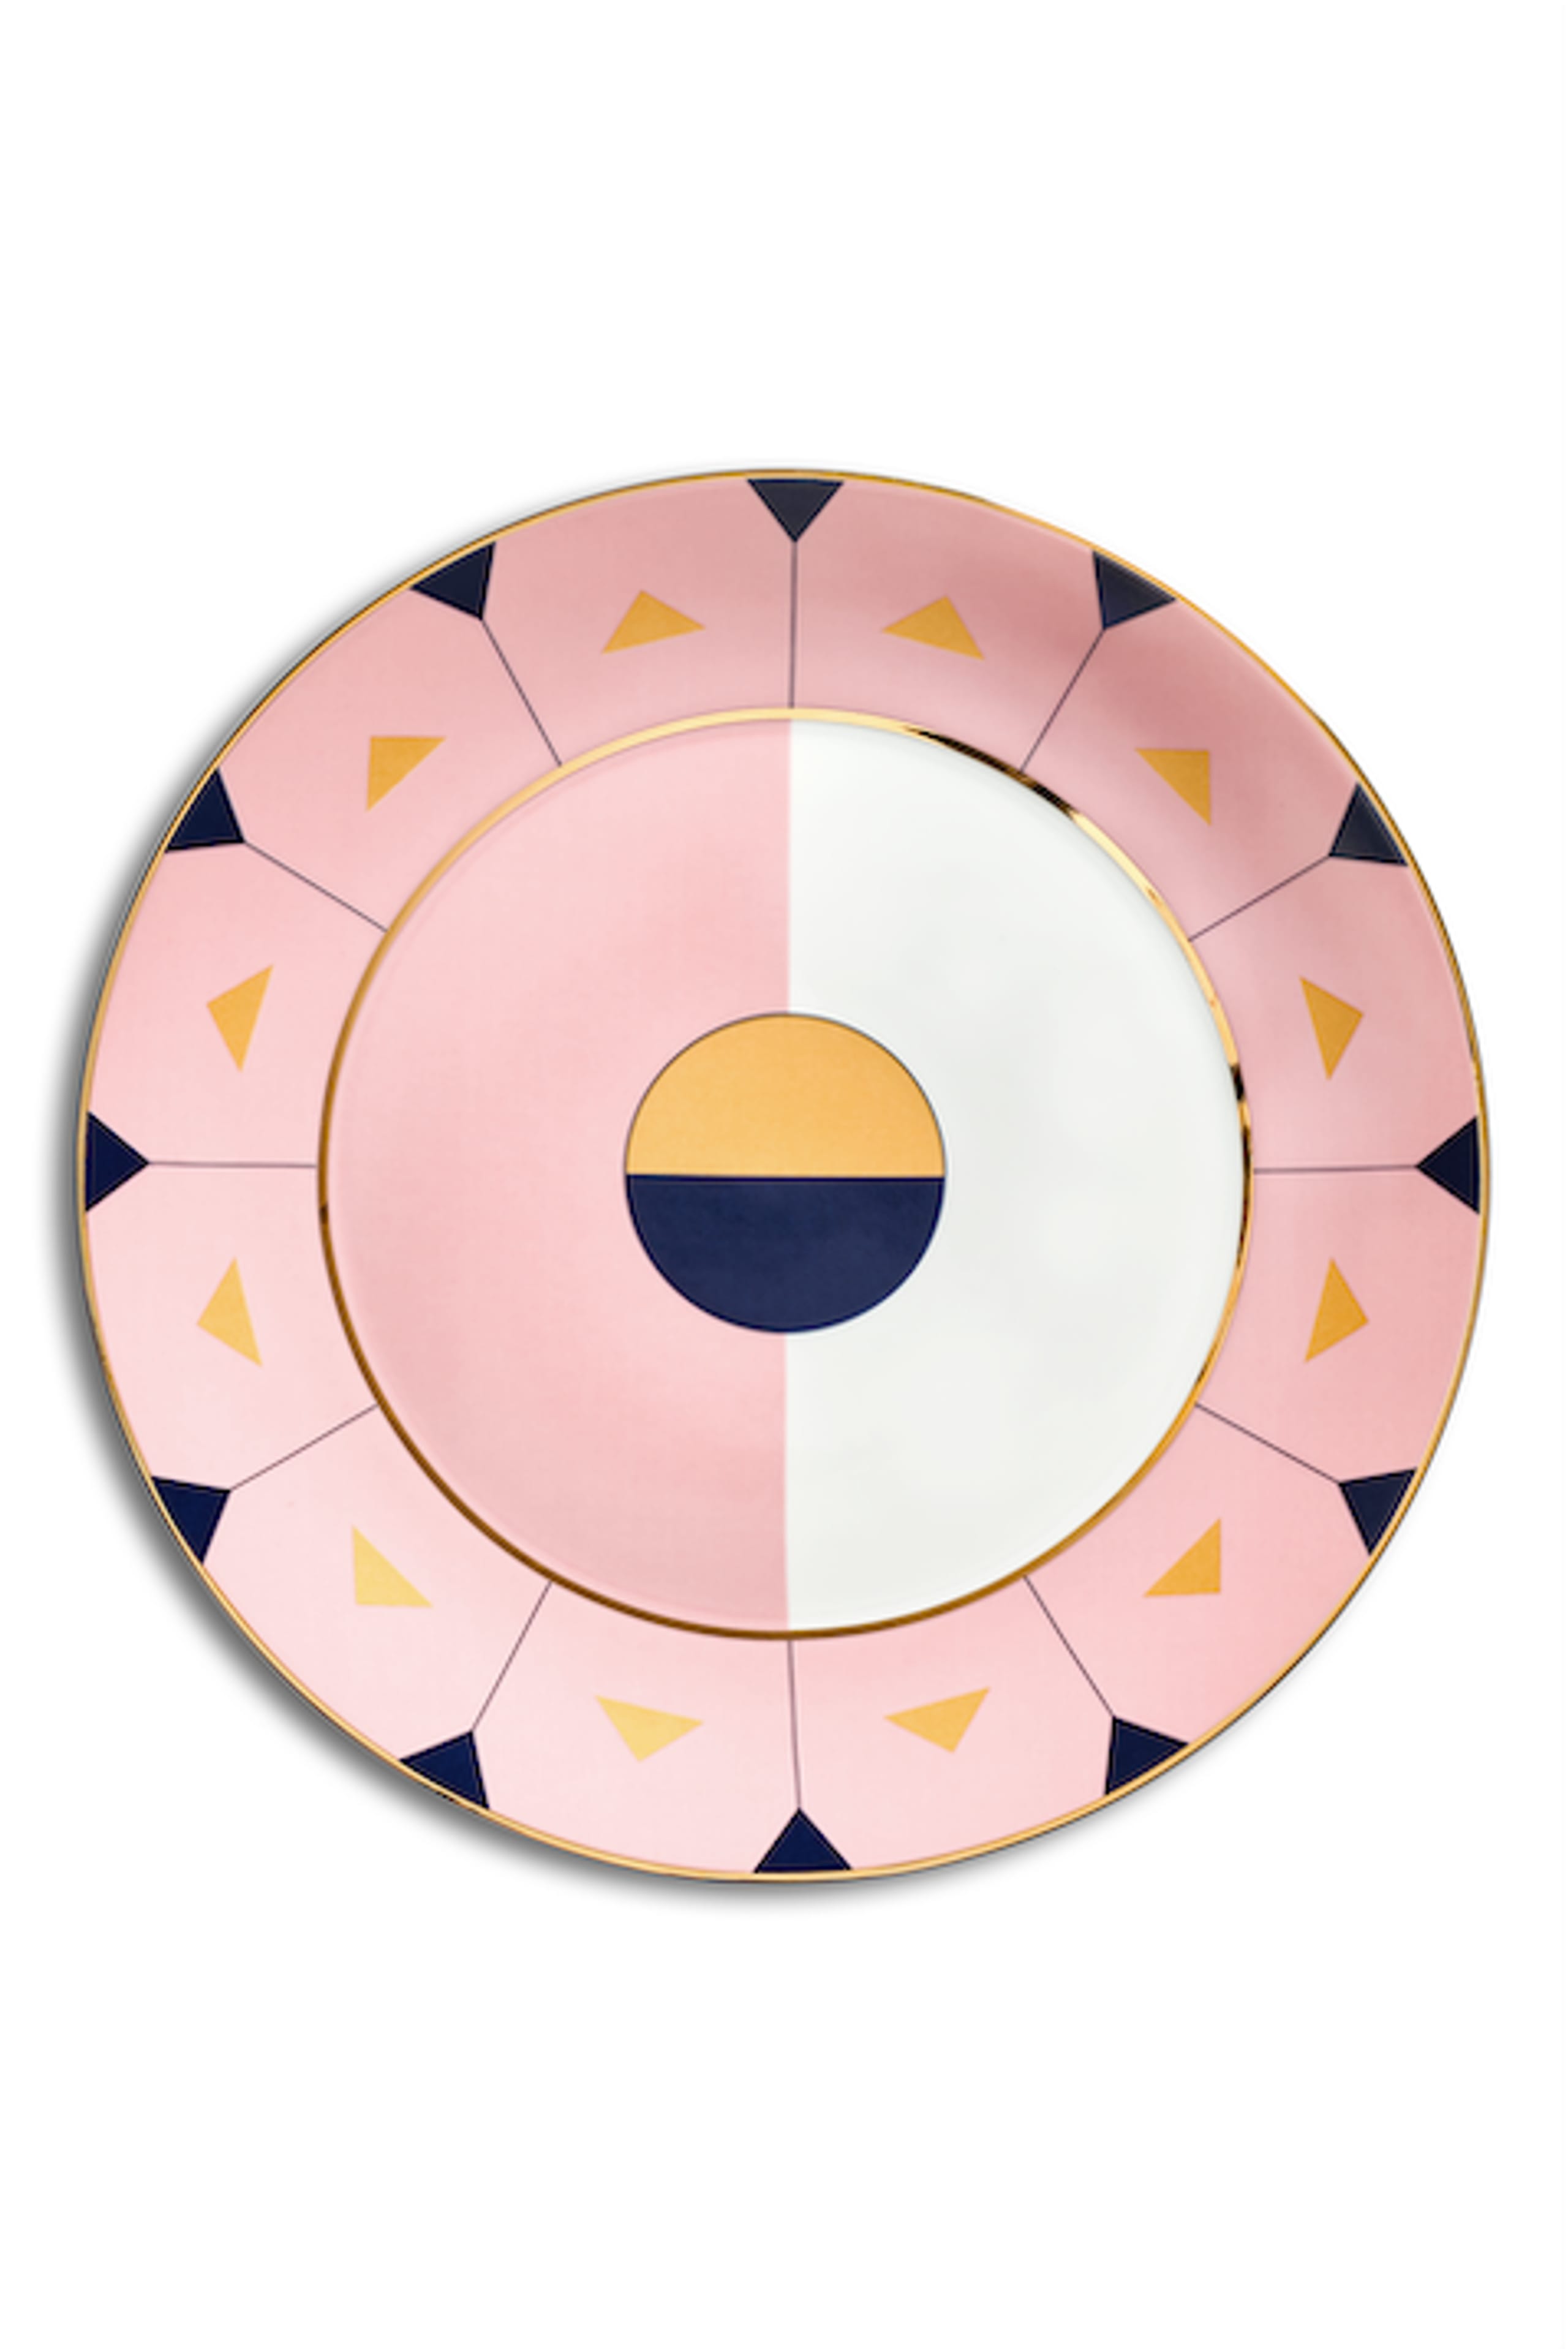 Reflections Copenhagen - Plate - Madeira & Lagos Dinner plate, set of 2 - Rose/Marine/Gold